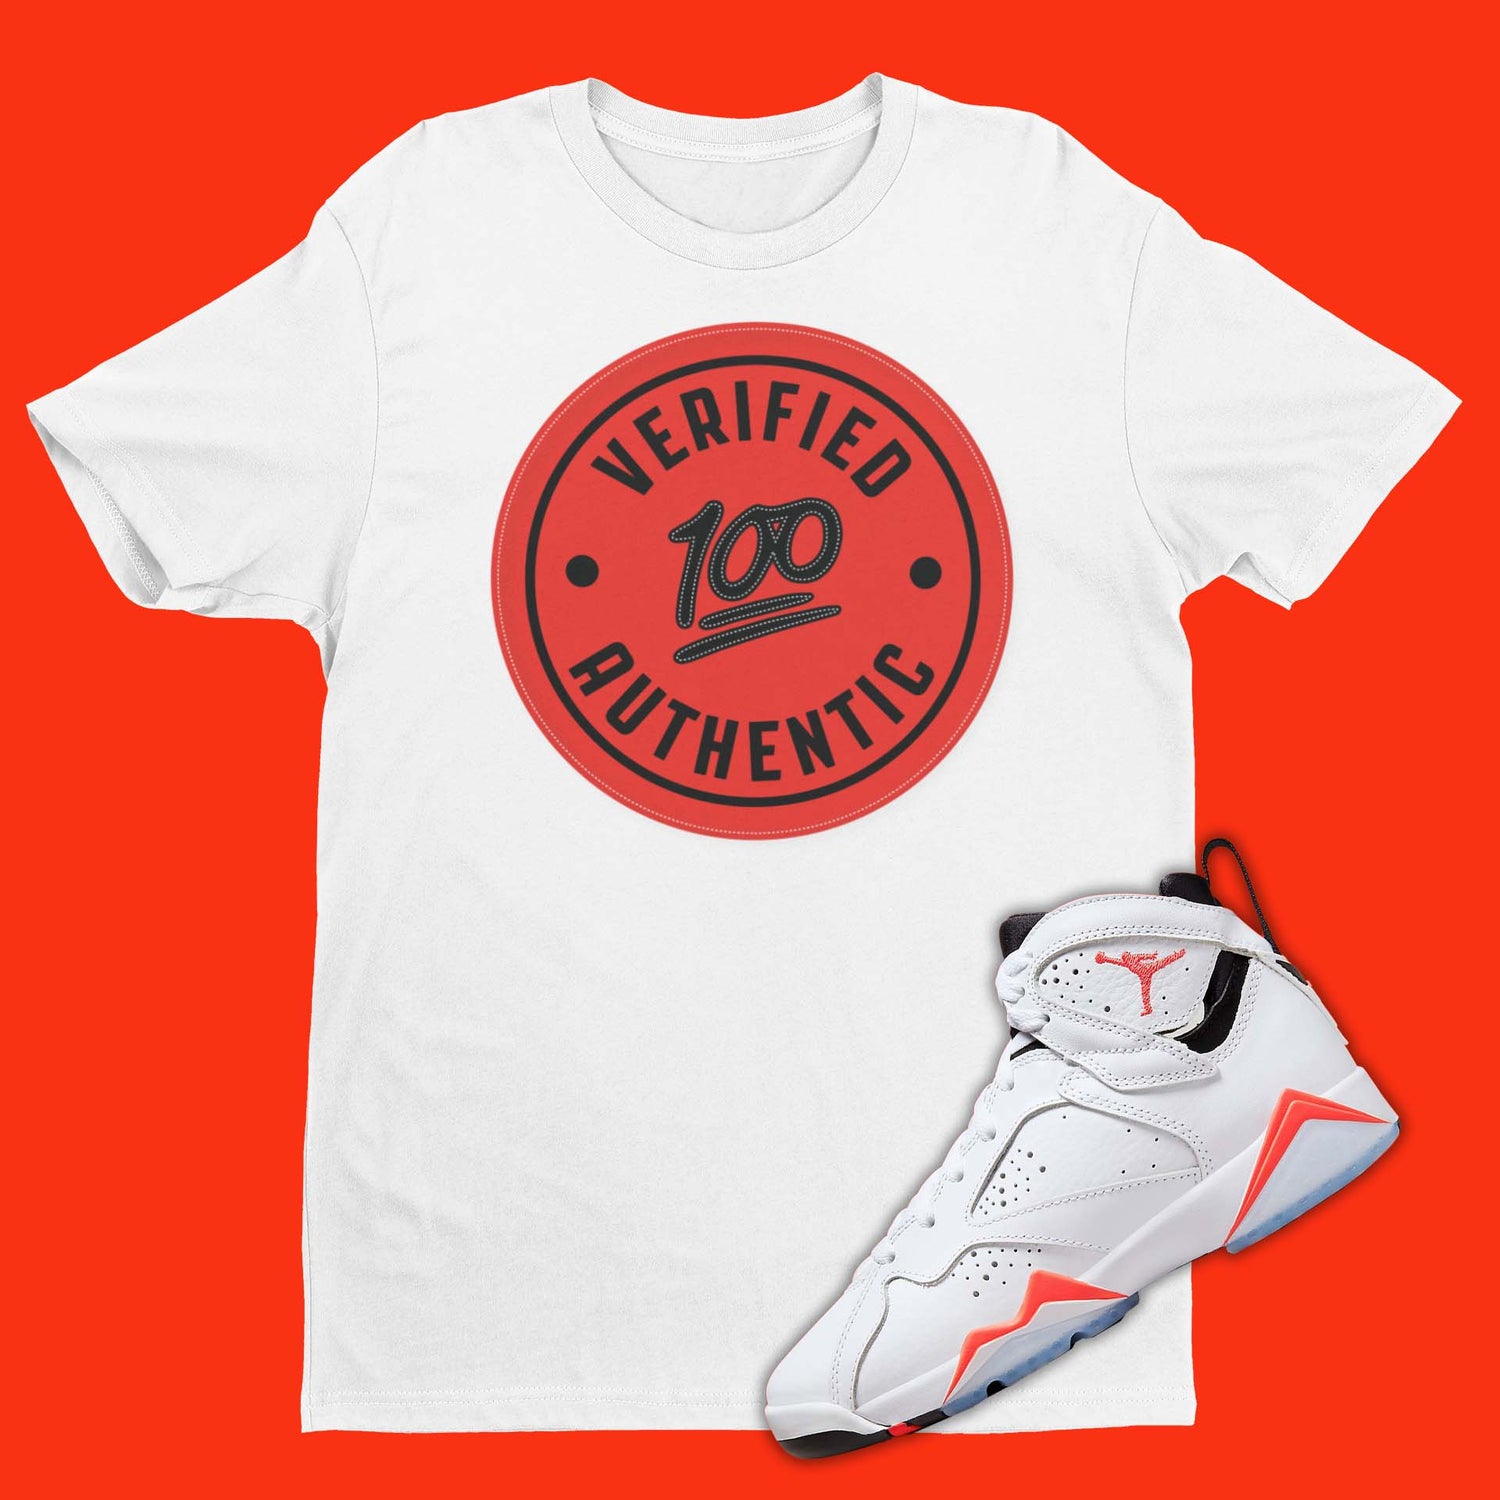 Verified Authentic Shirt Matching Air Jordan 7 White Infrared